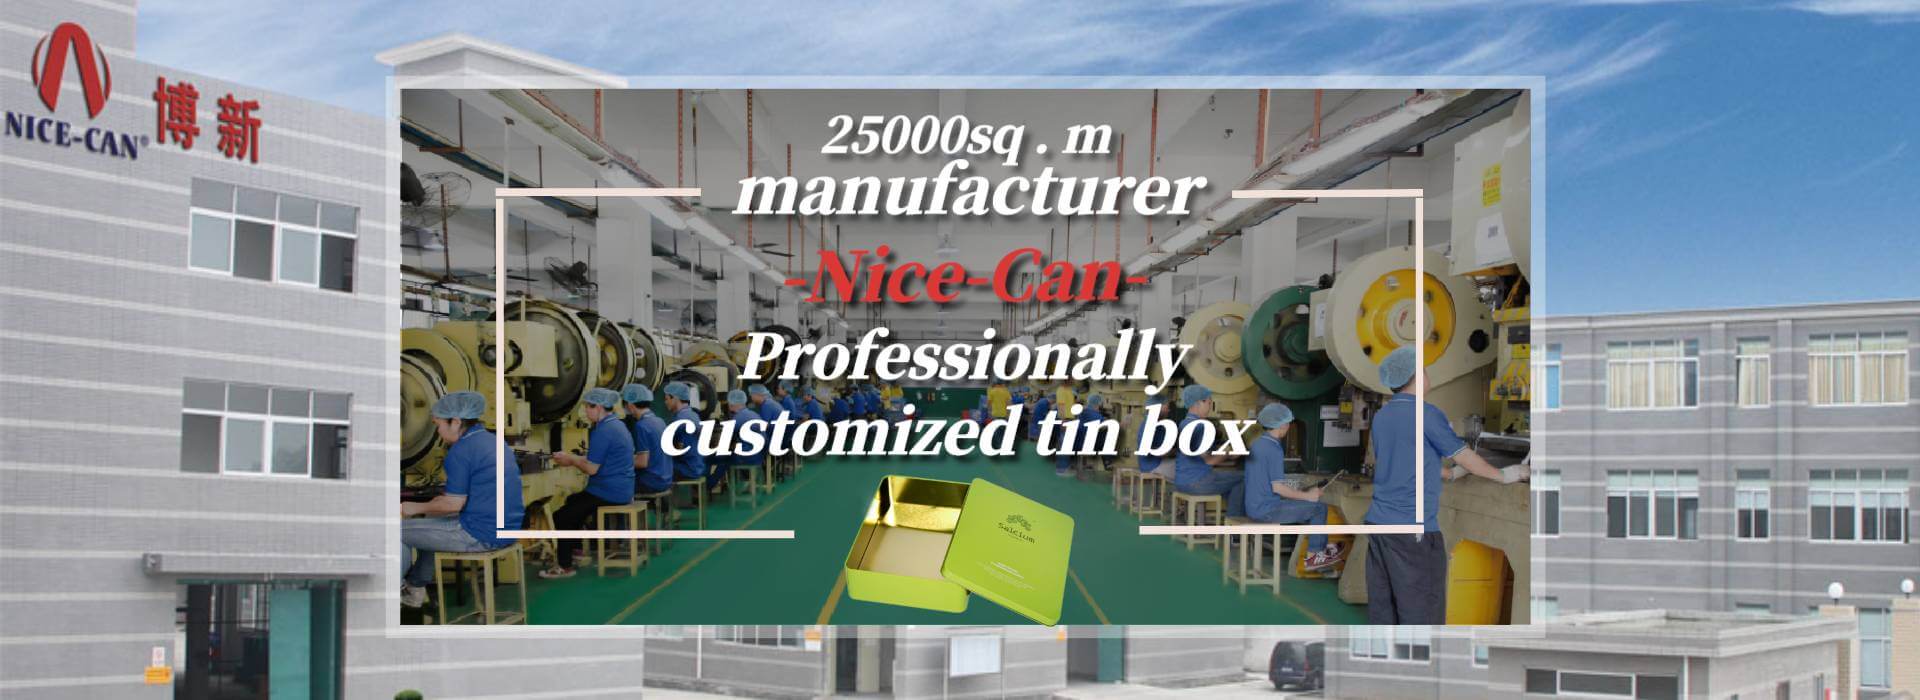 Nice-Can Manufacturing  custom tin box